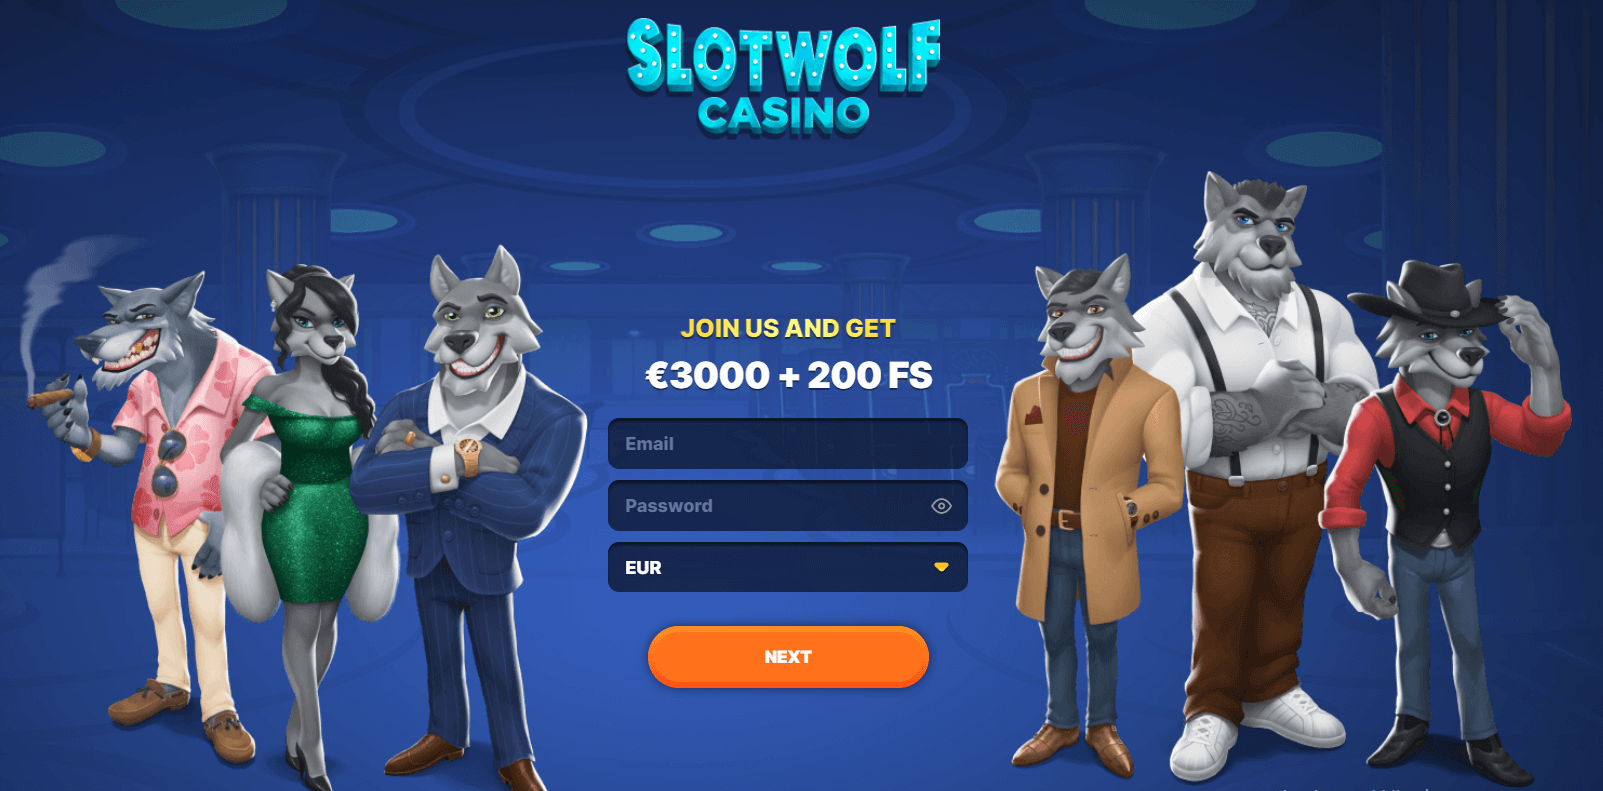 Slotwolf welcome bonus